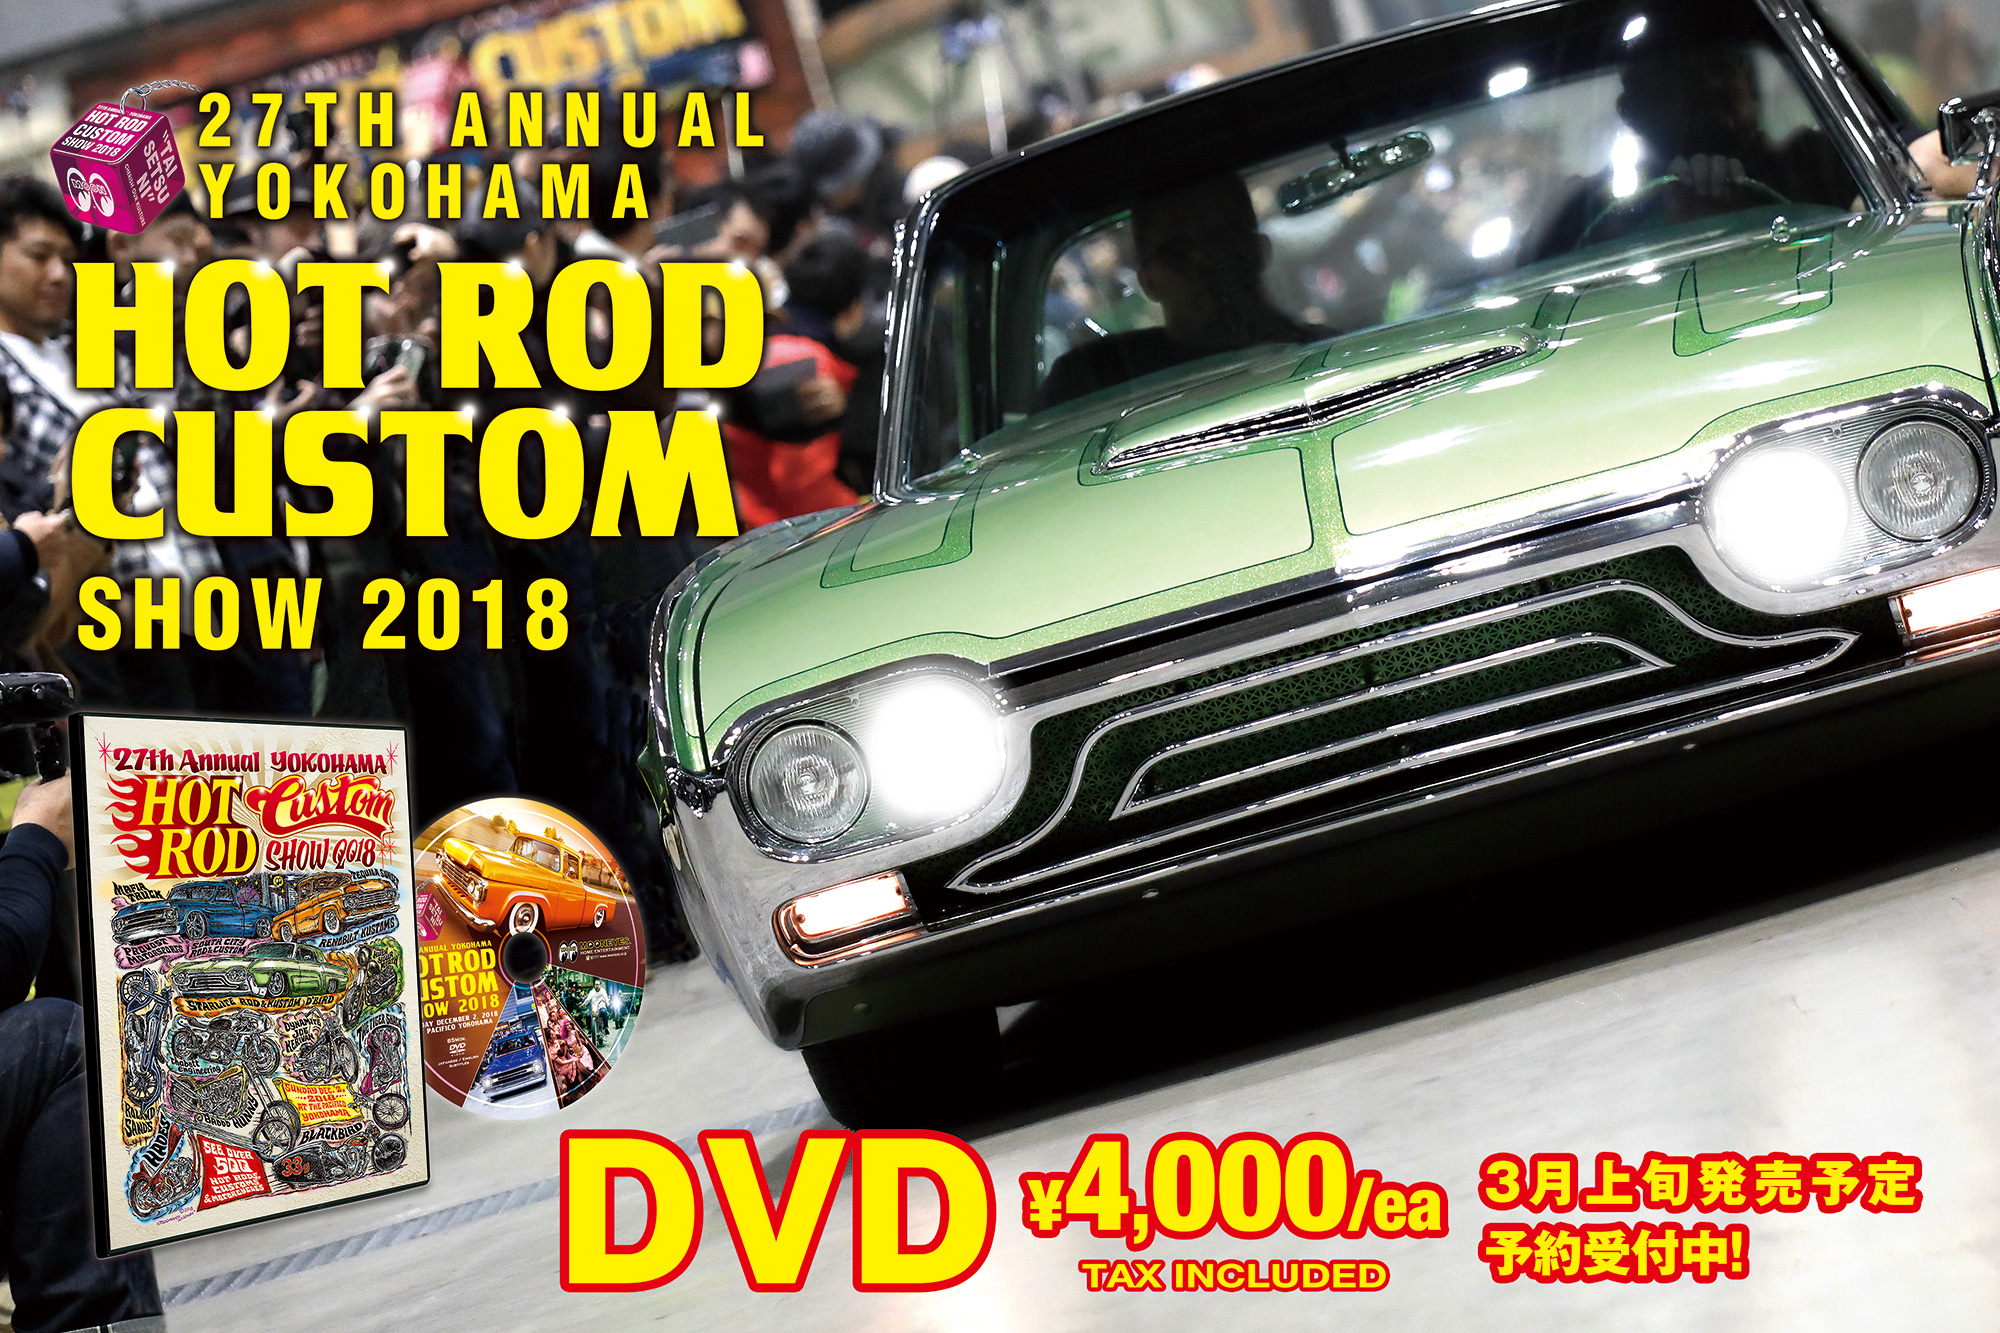 27th Annual YOKOHAMA HOT ROD CUSTOM SHOW 2018 DVD 好評発売中！